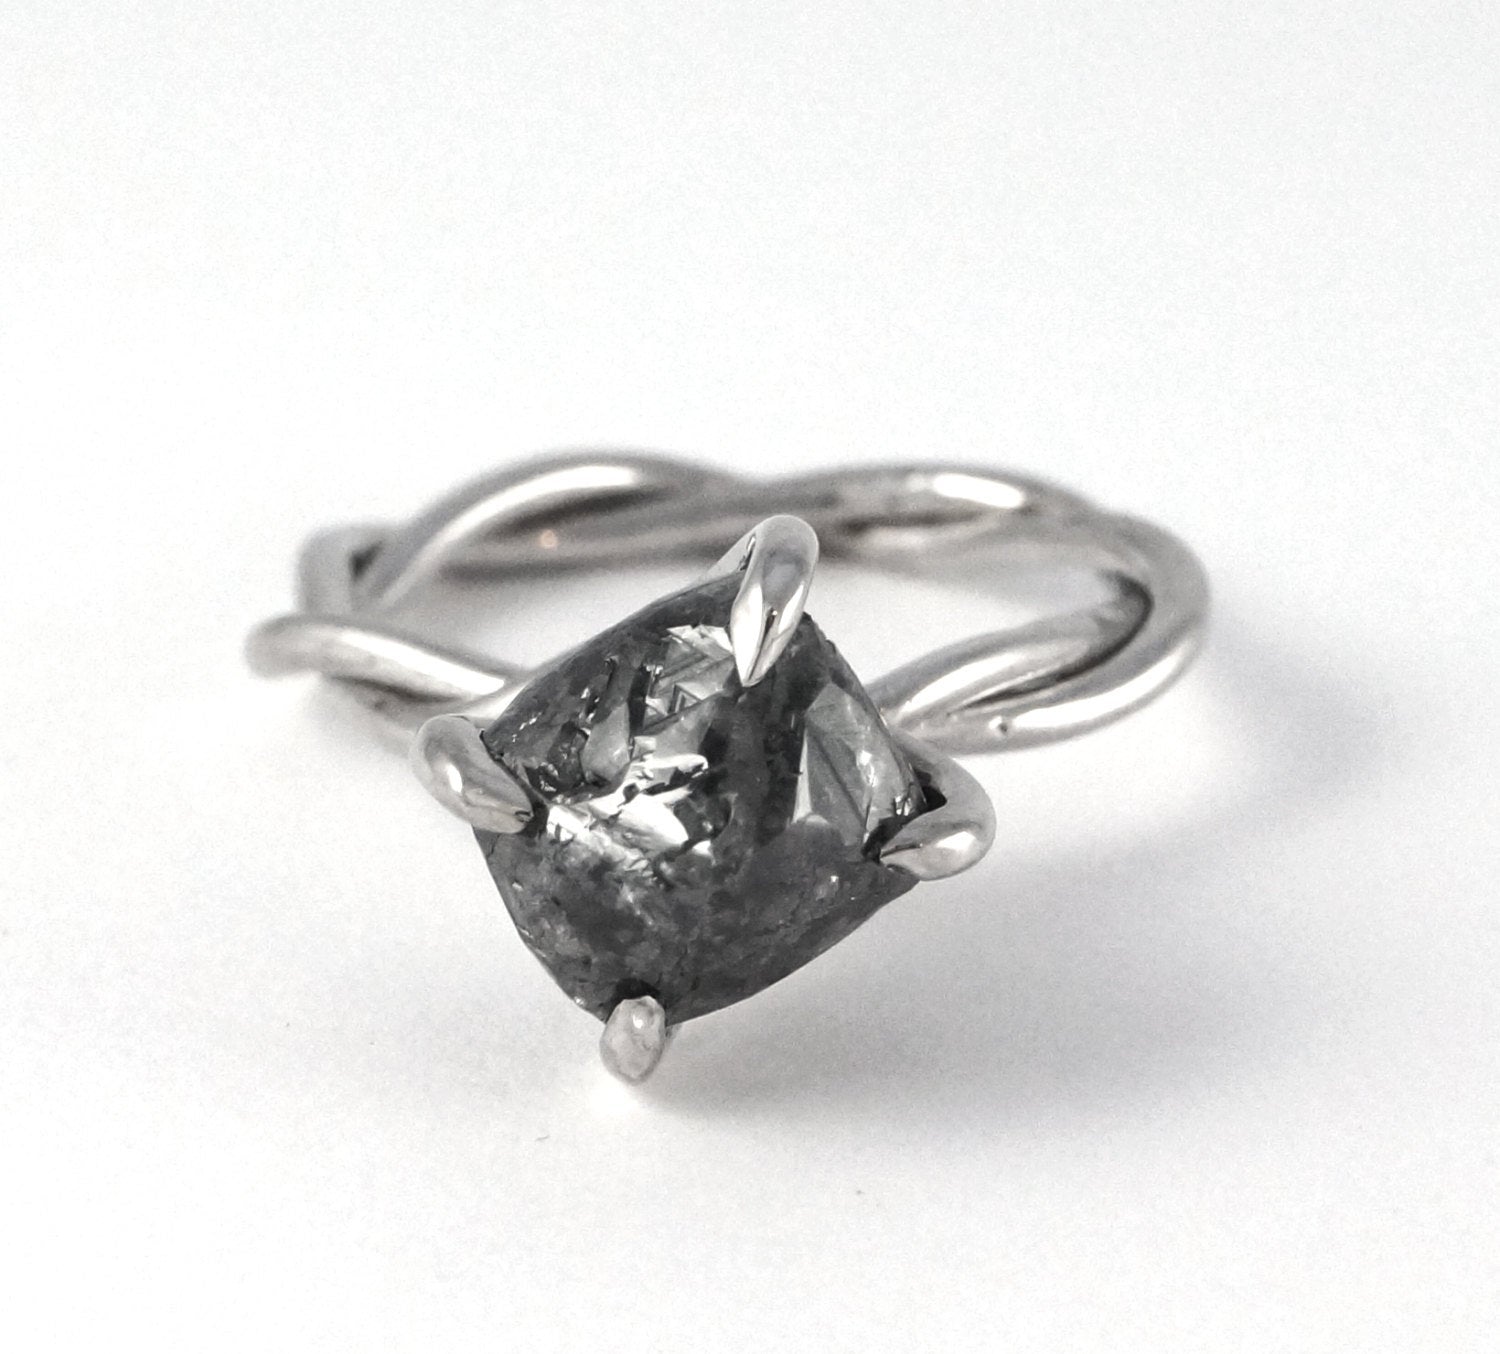 Rough Diamond Ring - Unique Alternative Grey Daimond Engagement Ring, Non Traditional Raw Diamond Twist Ring, White Gold Artisan Bridal Rock